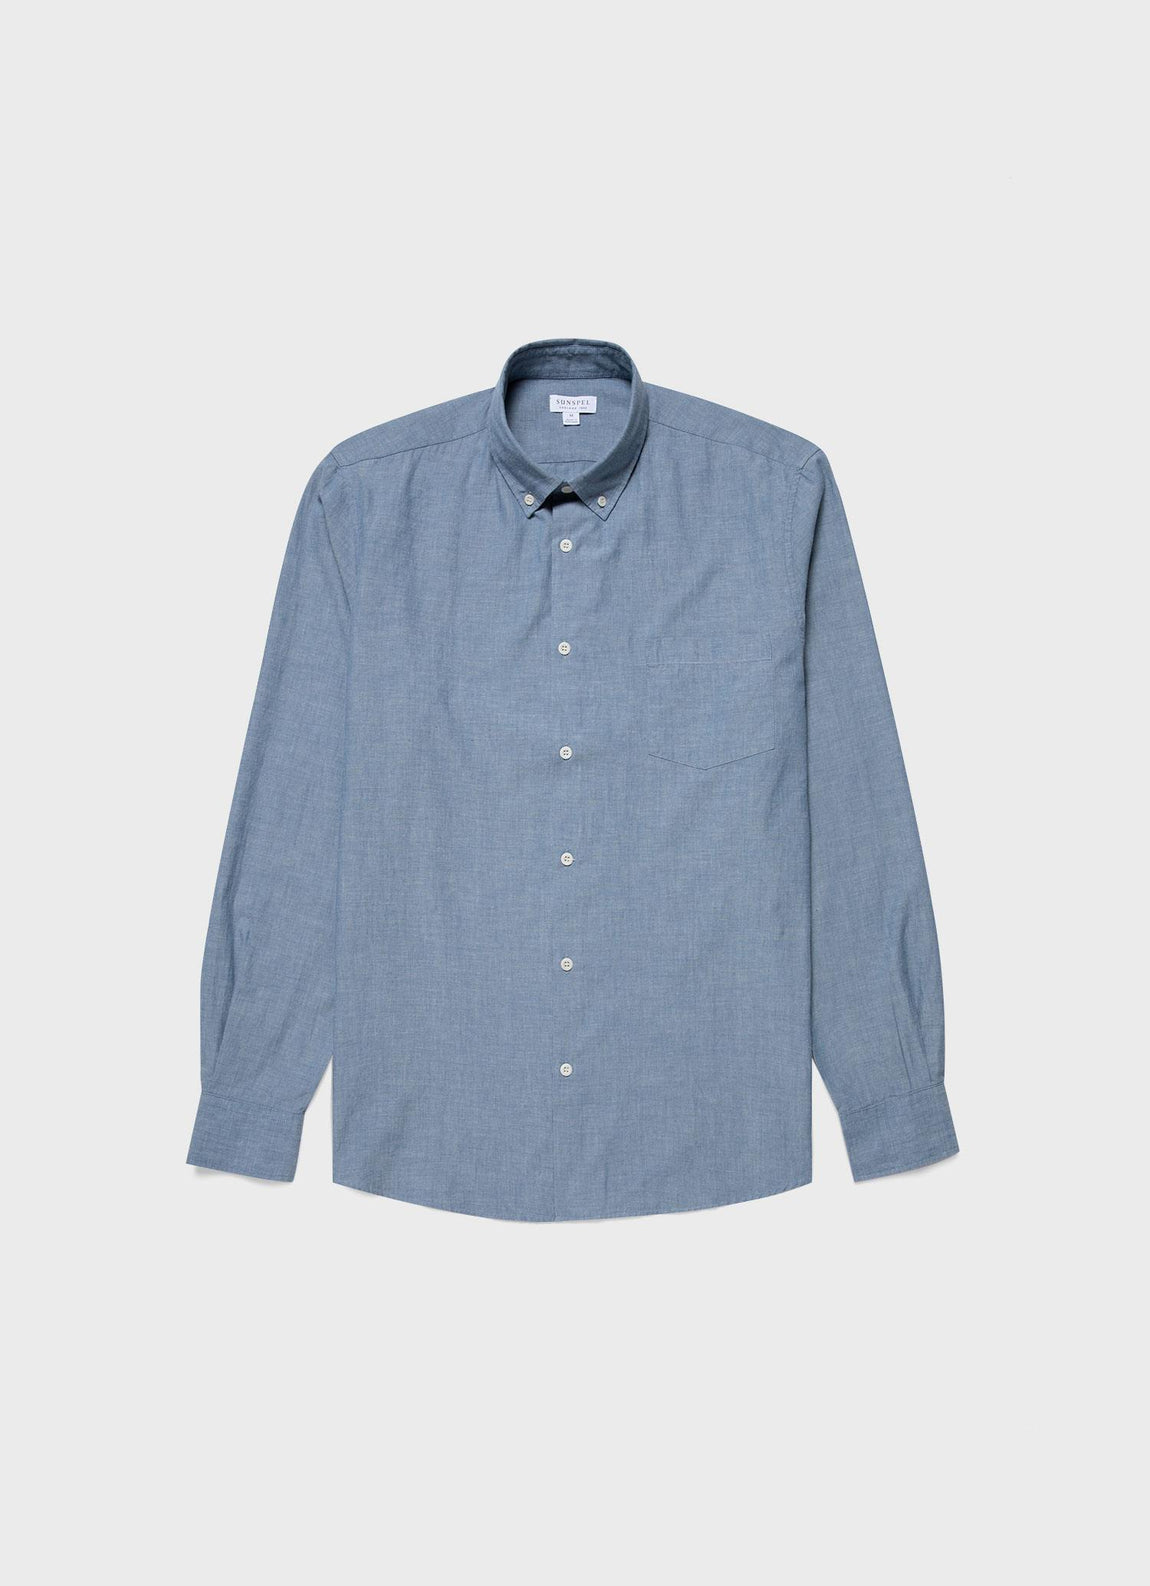 Men's Button Down Japanese Selvedge Shirt in Blue Selvedge Chambray